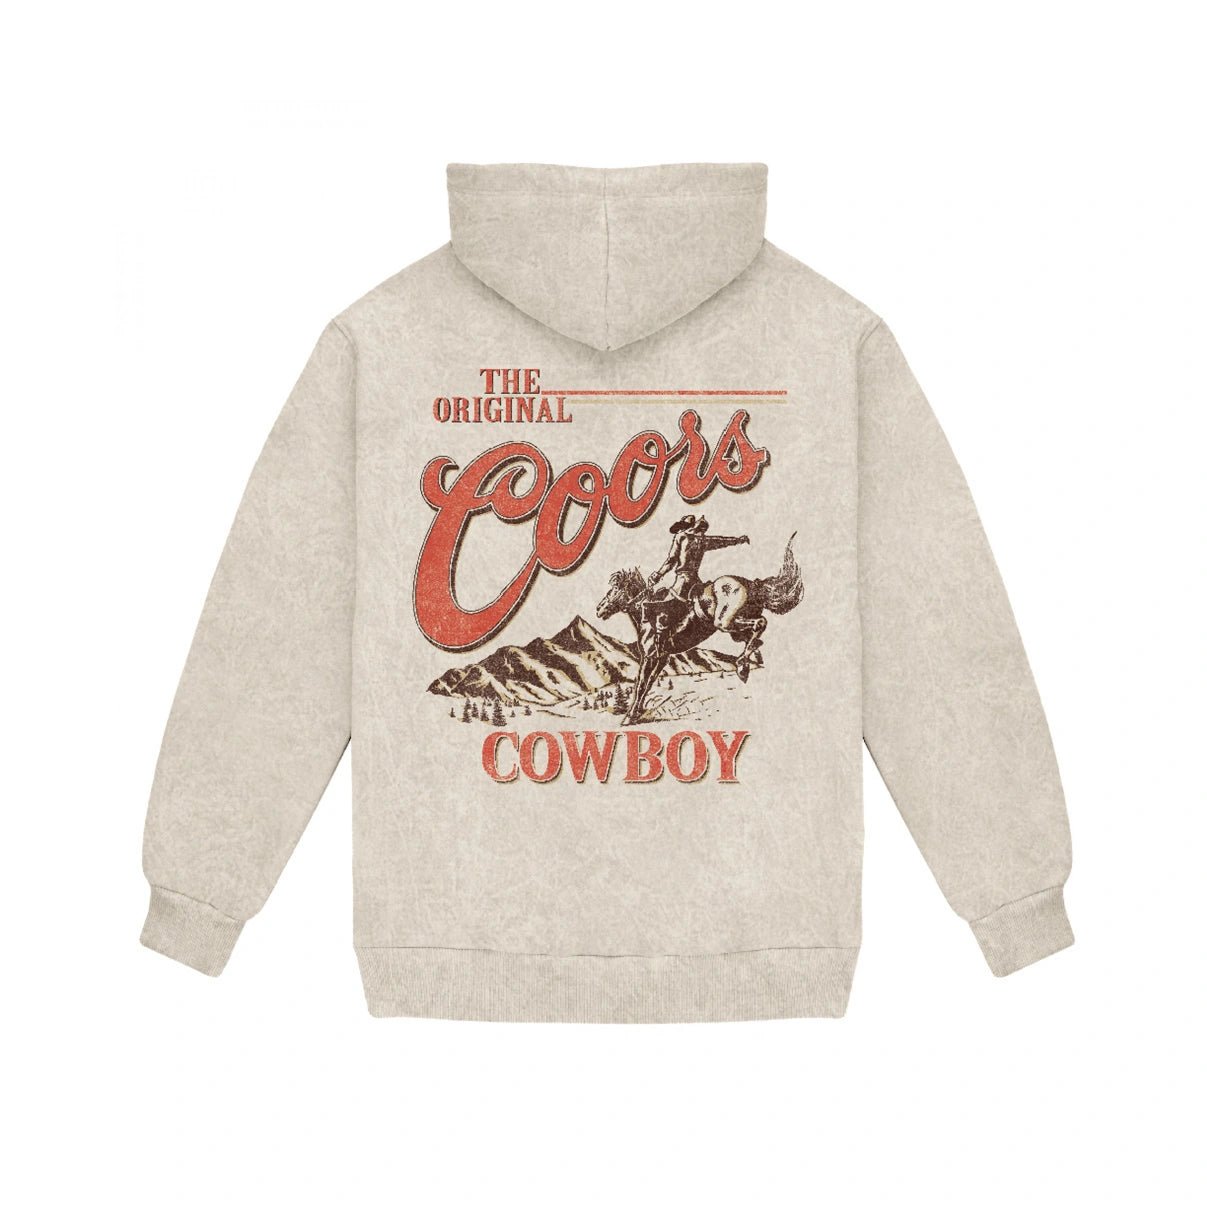 Changes Men's Coors Original Cowboy Pull-Over Hoodie 47-261-234